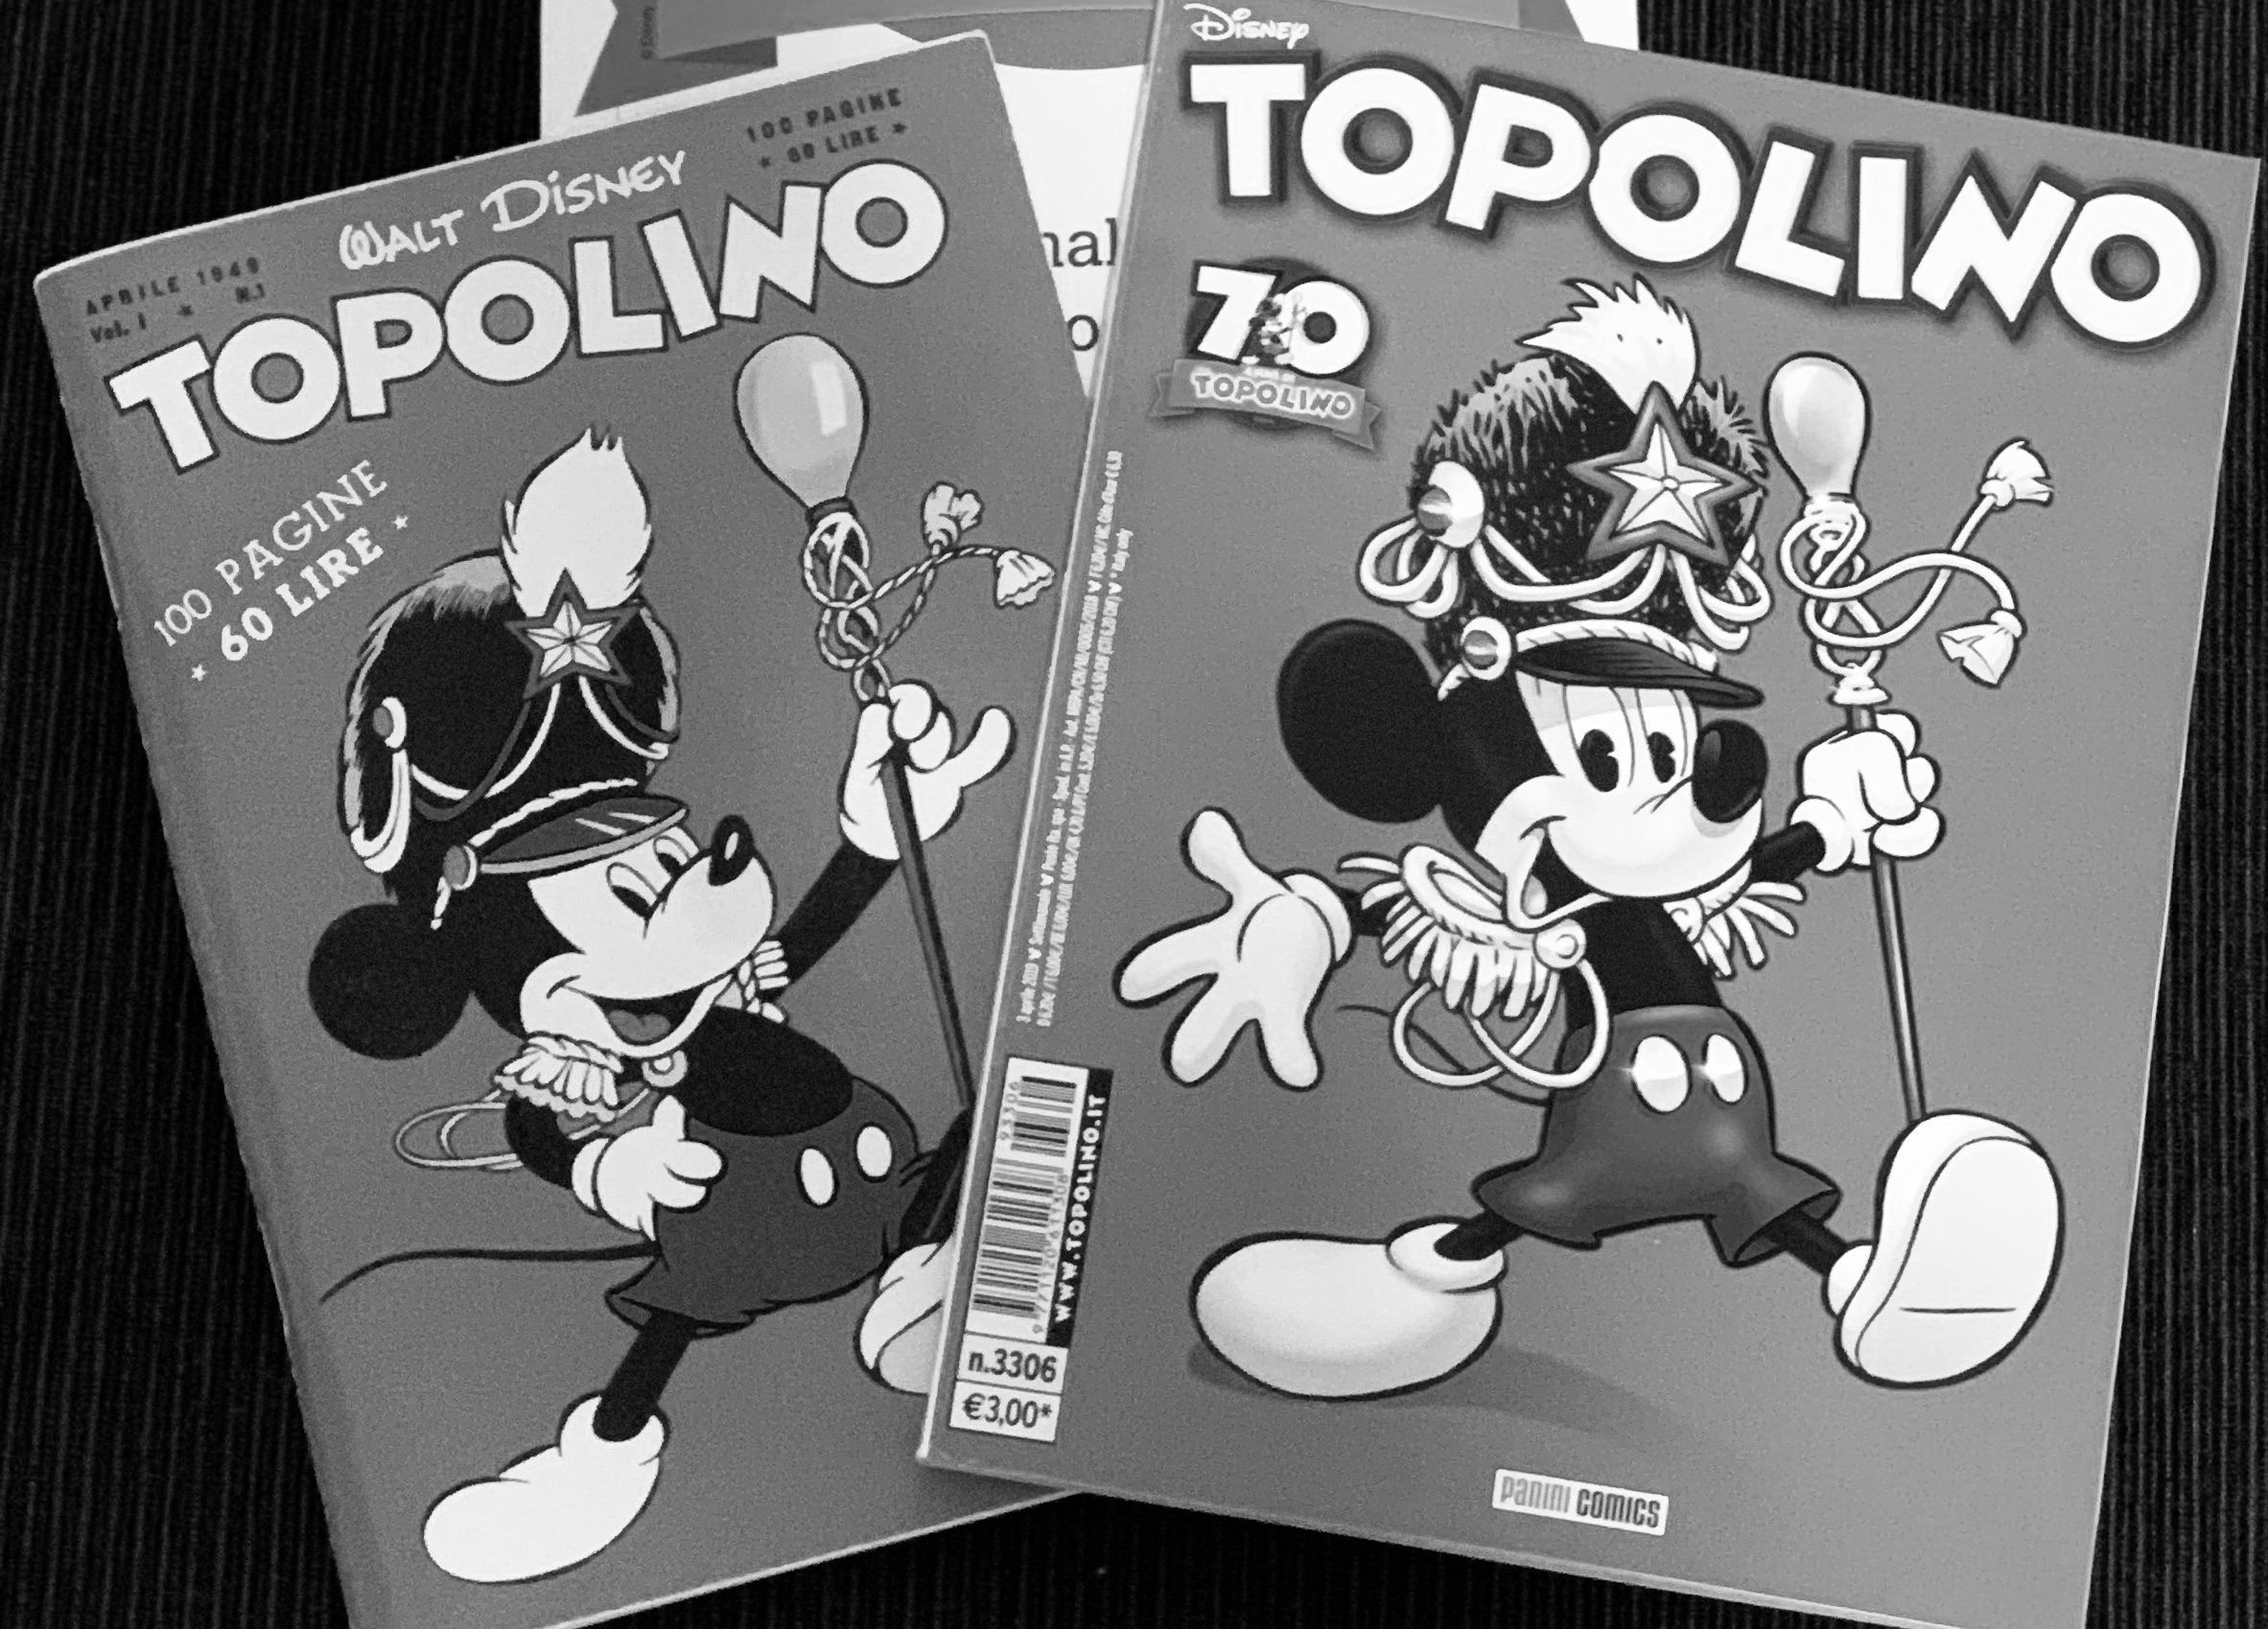 Topolino magazine